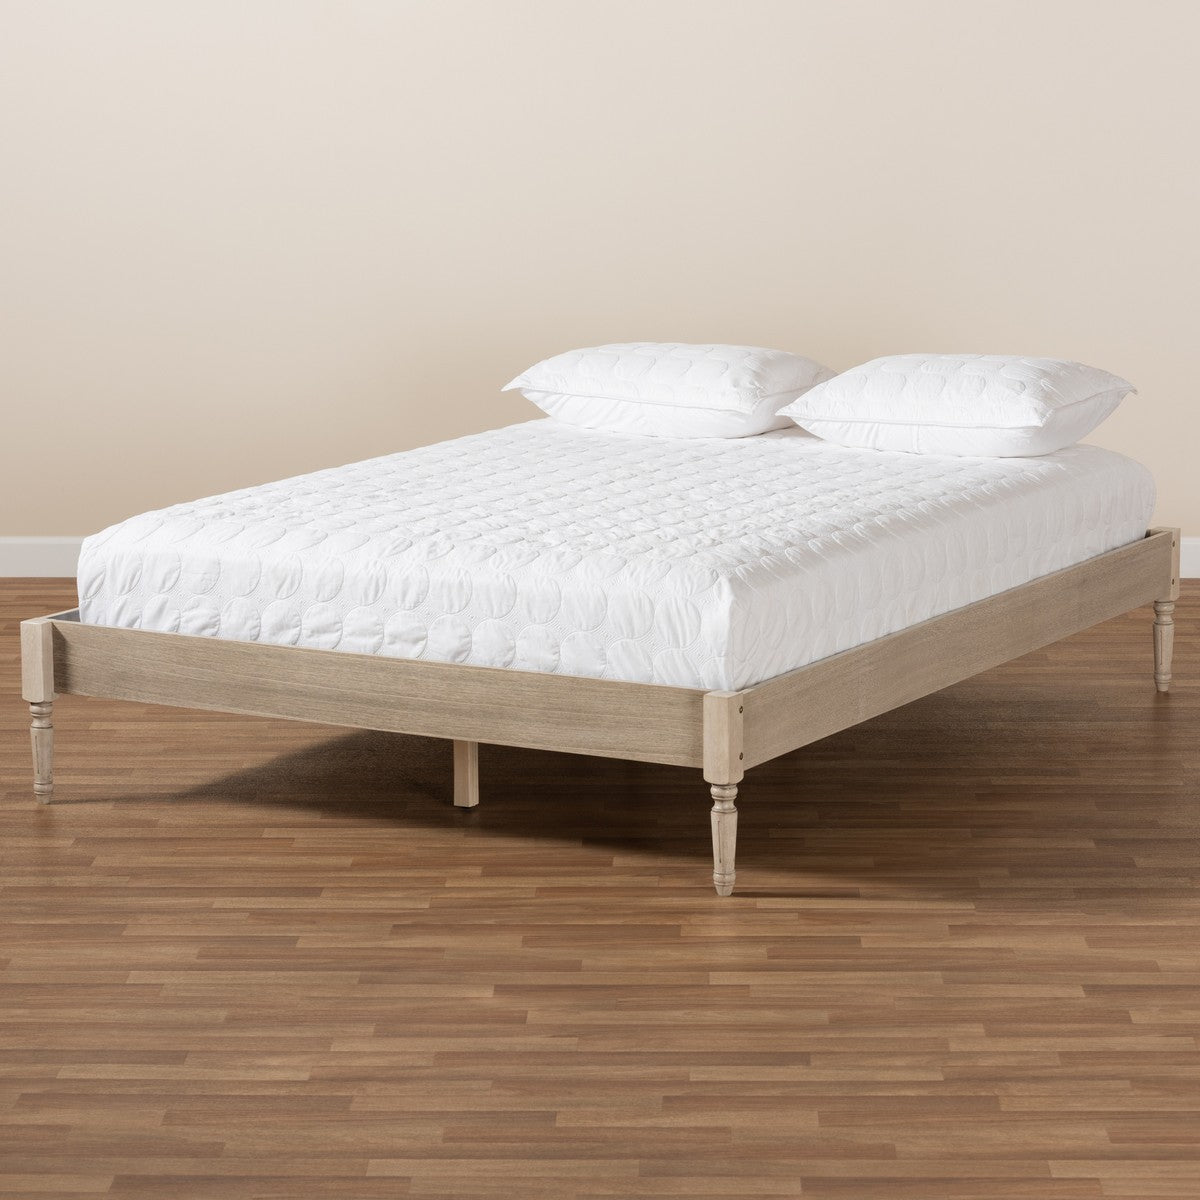 Baxton Studio Colette French Bohemian Antique White Oak Finished Wood King Size Platform Bed Frame